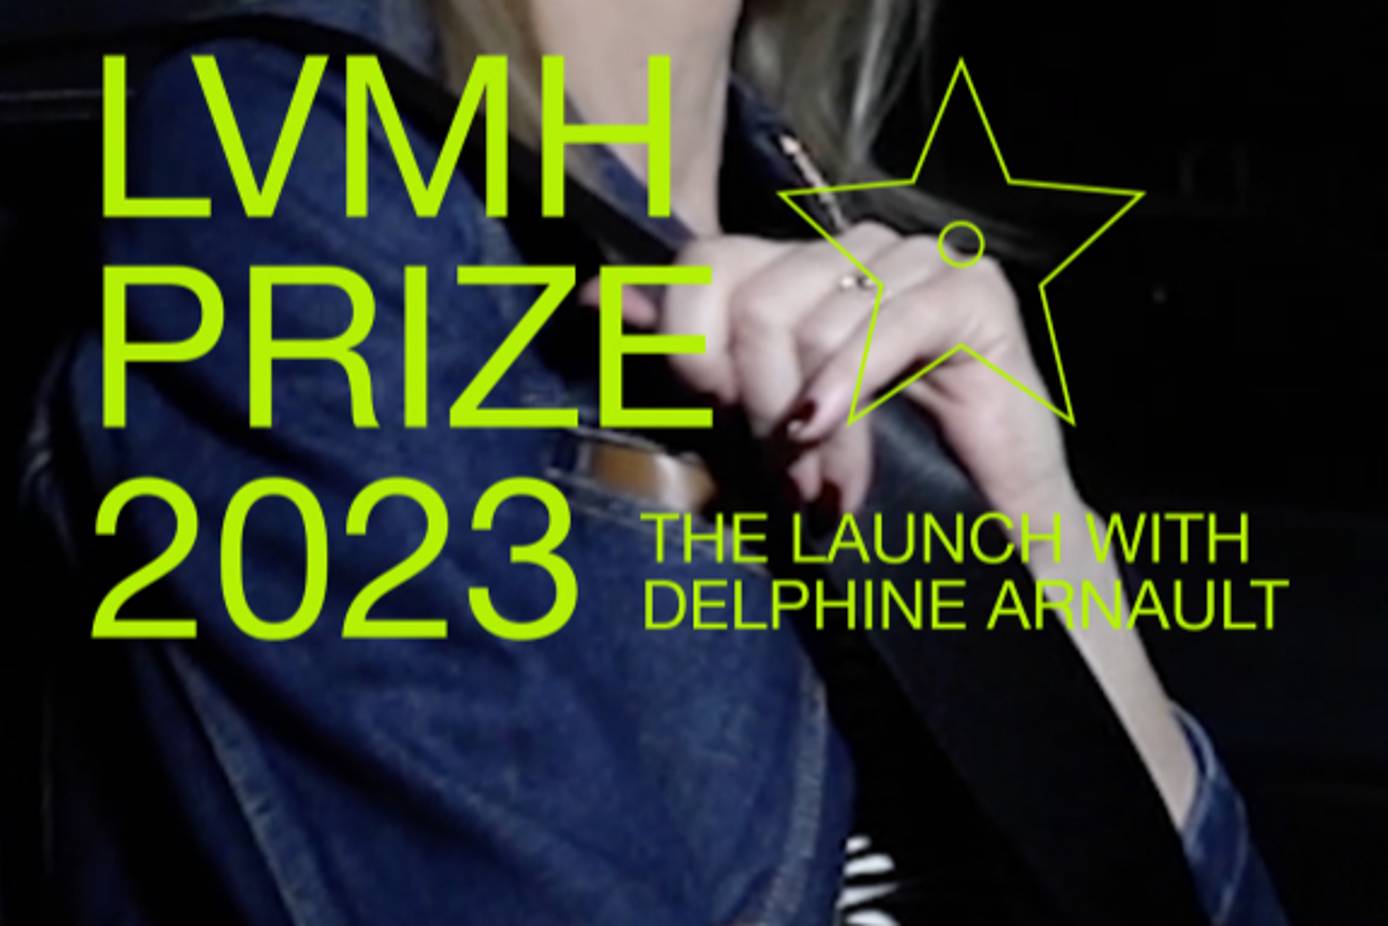 lvmh prize 2023